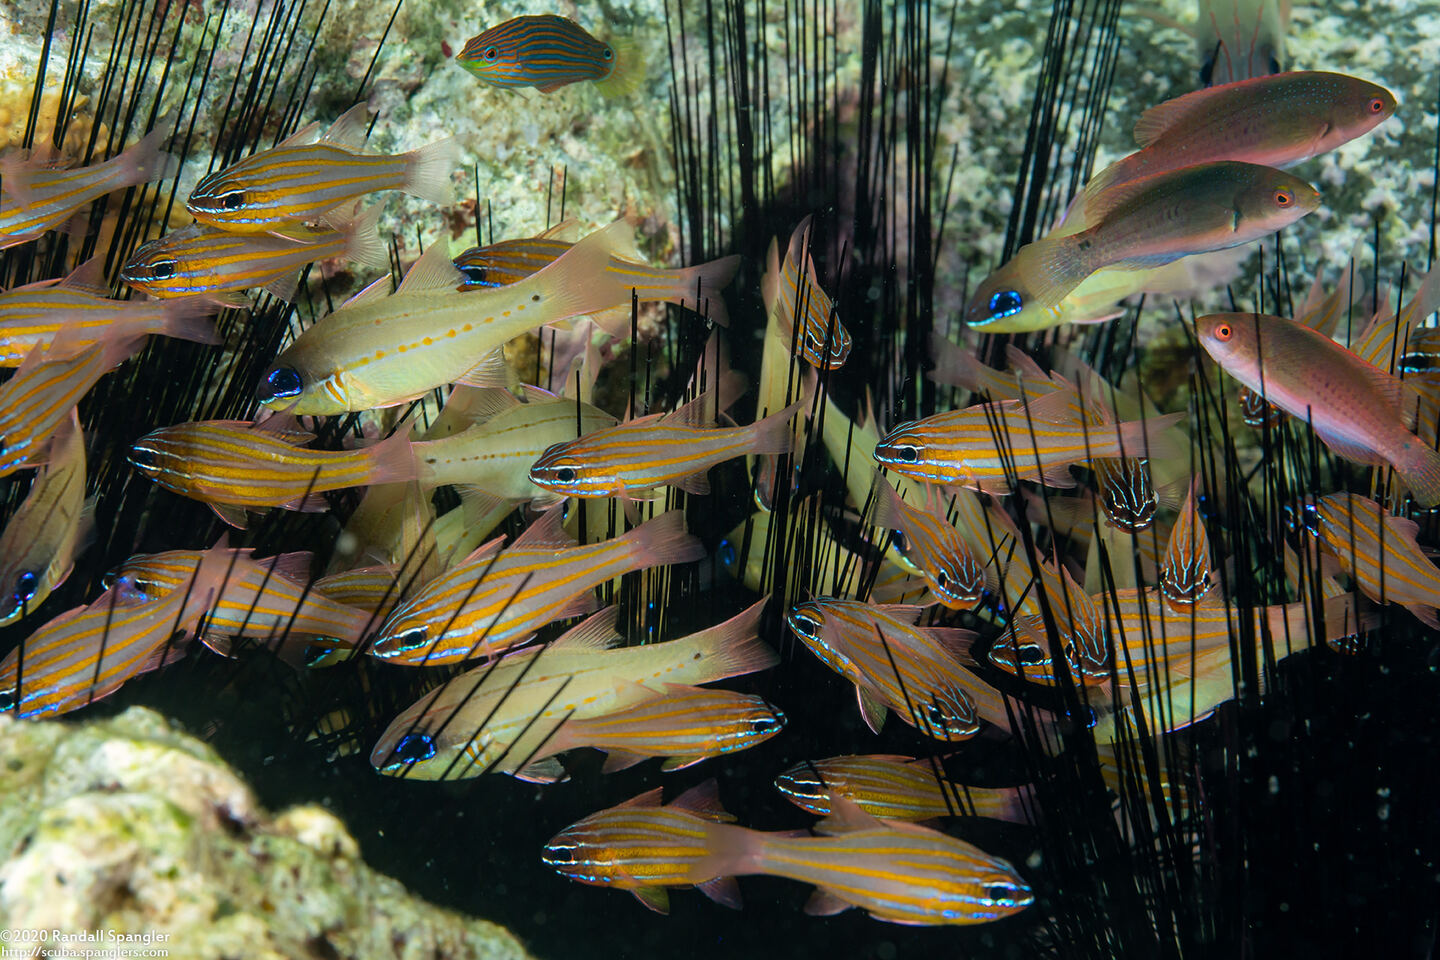 Ostorhinchus chrysotaenia (Yellowlined Cardinalfish); Cardinalfish sheltering in urchins